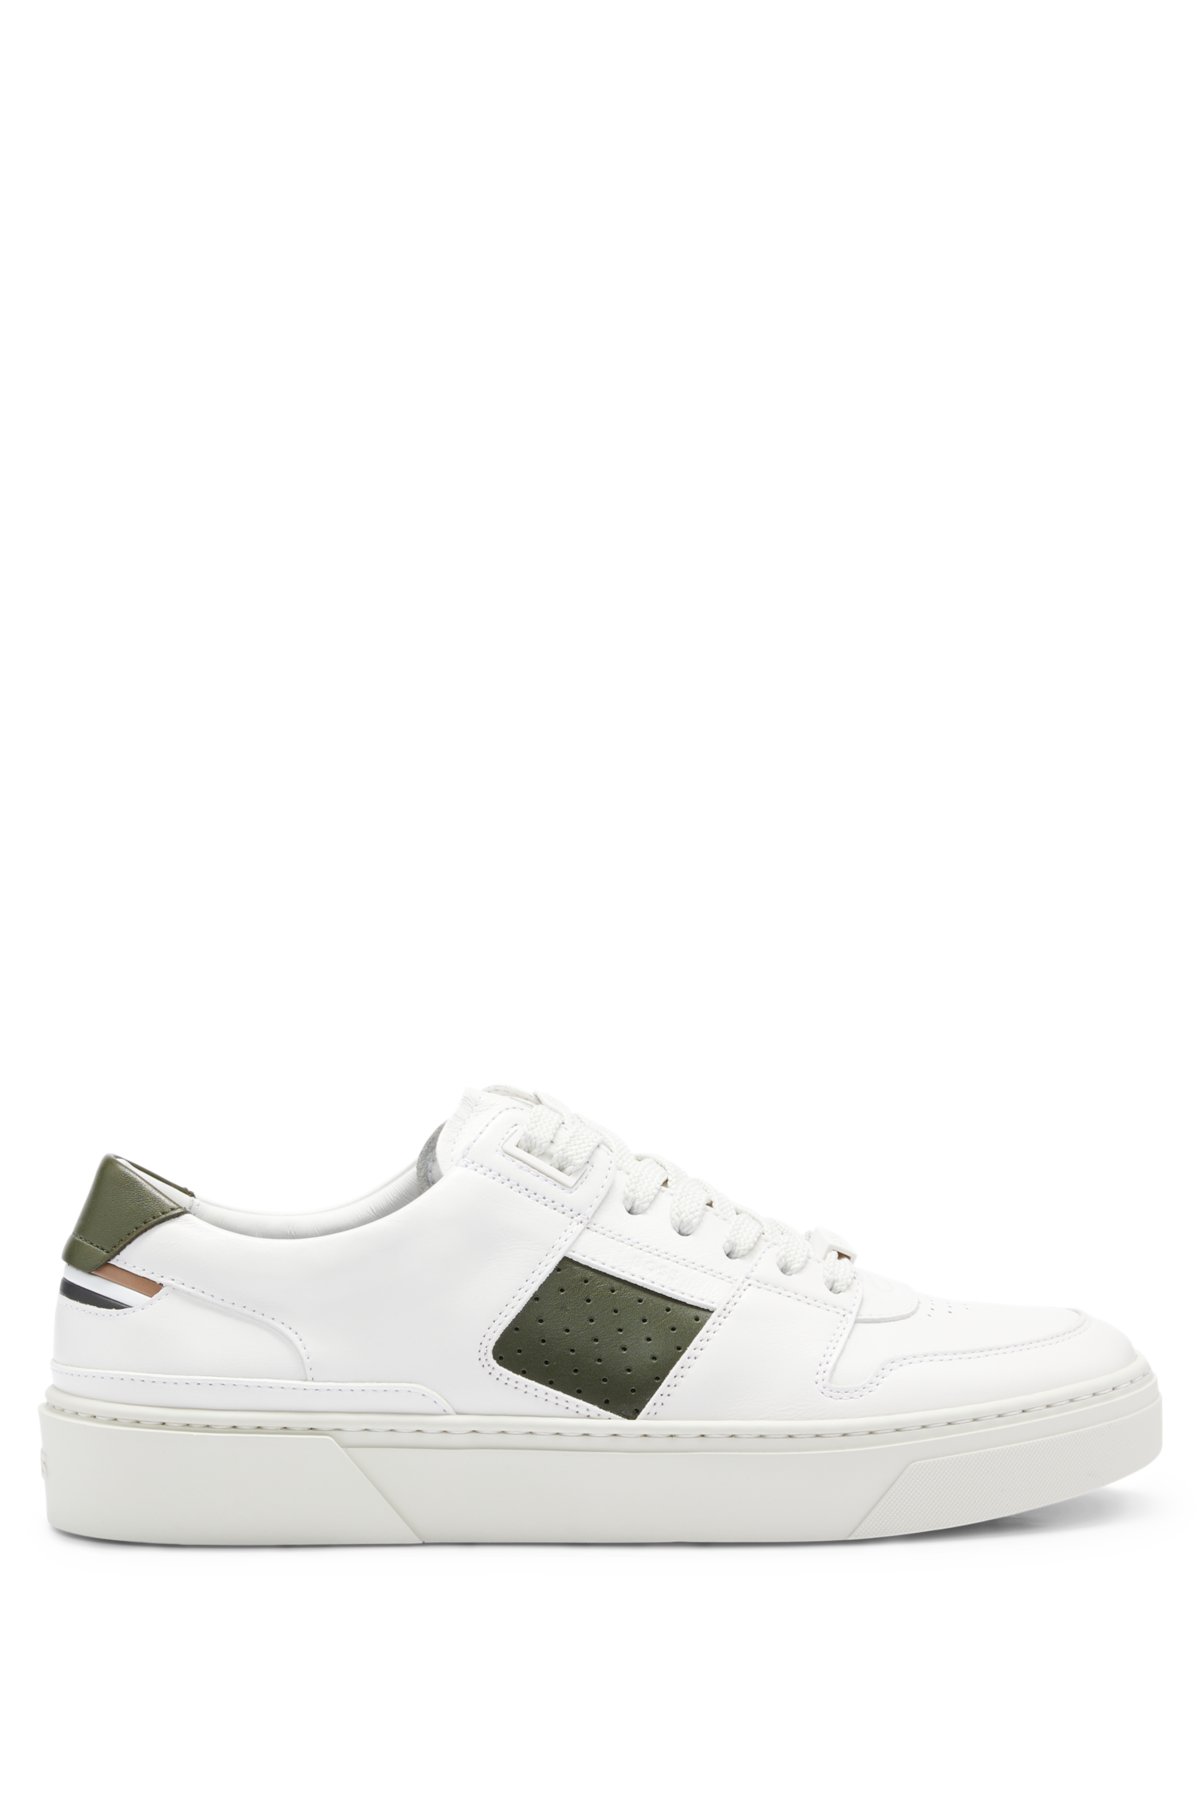 Louis Vuitton, Shoes, Louis Vuitton Mens White Leather Trim Lace Up Low  Top Sneakers 8